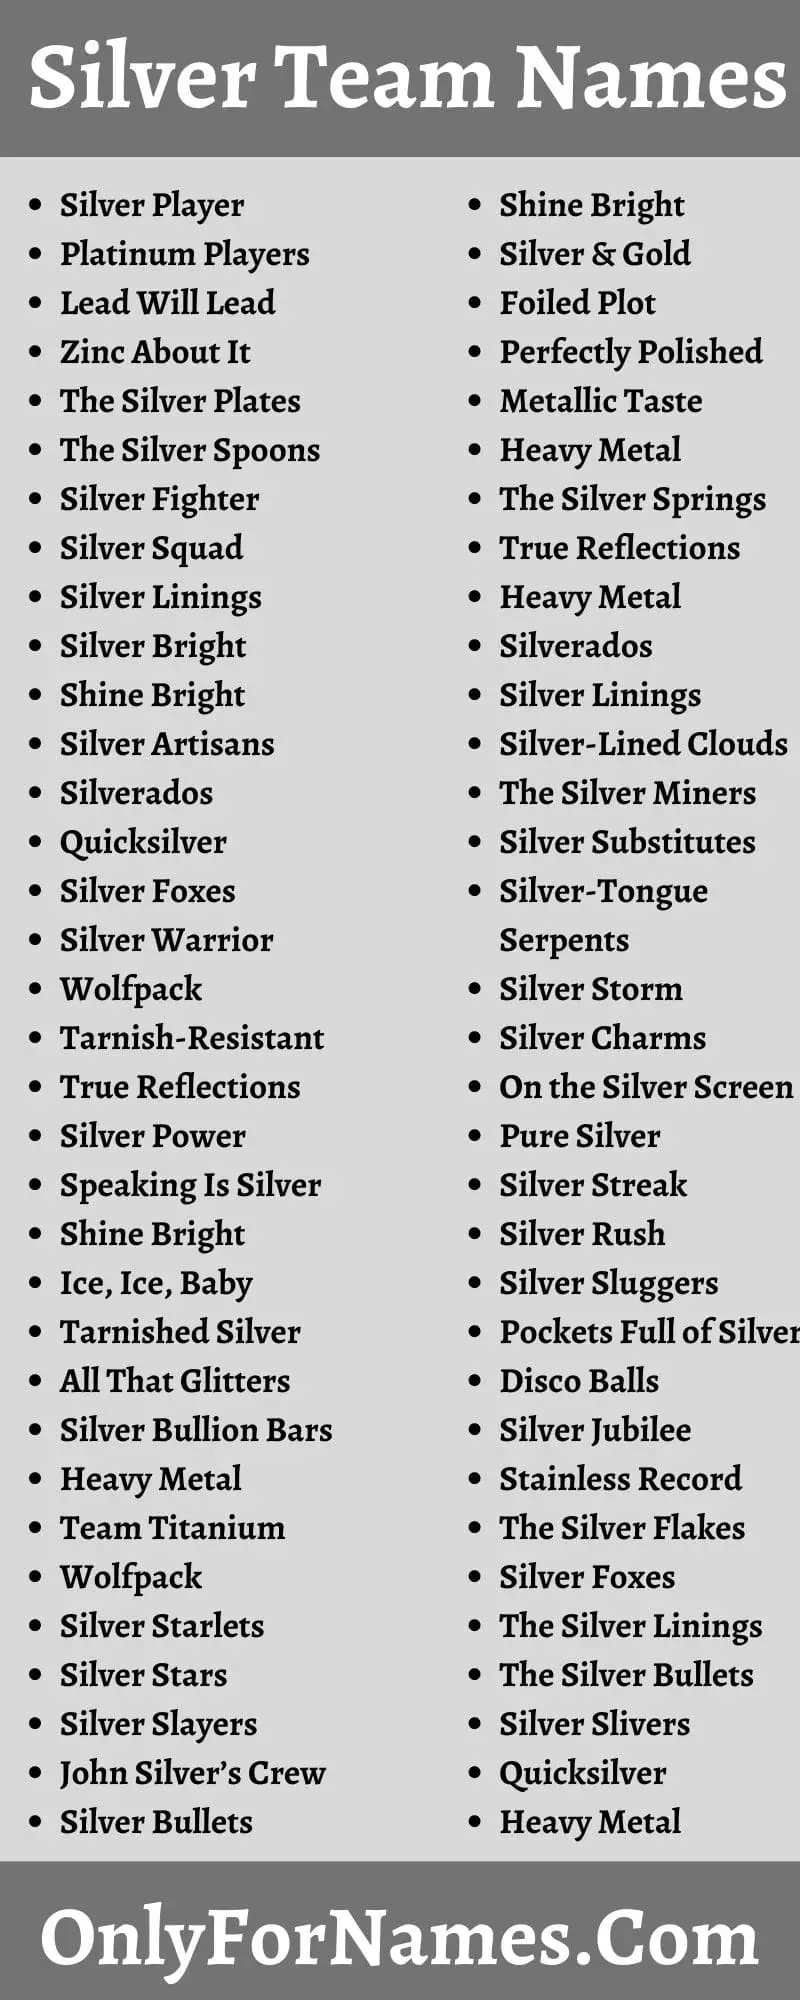 Silver Team Names